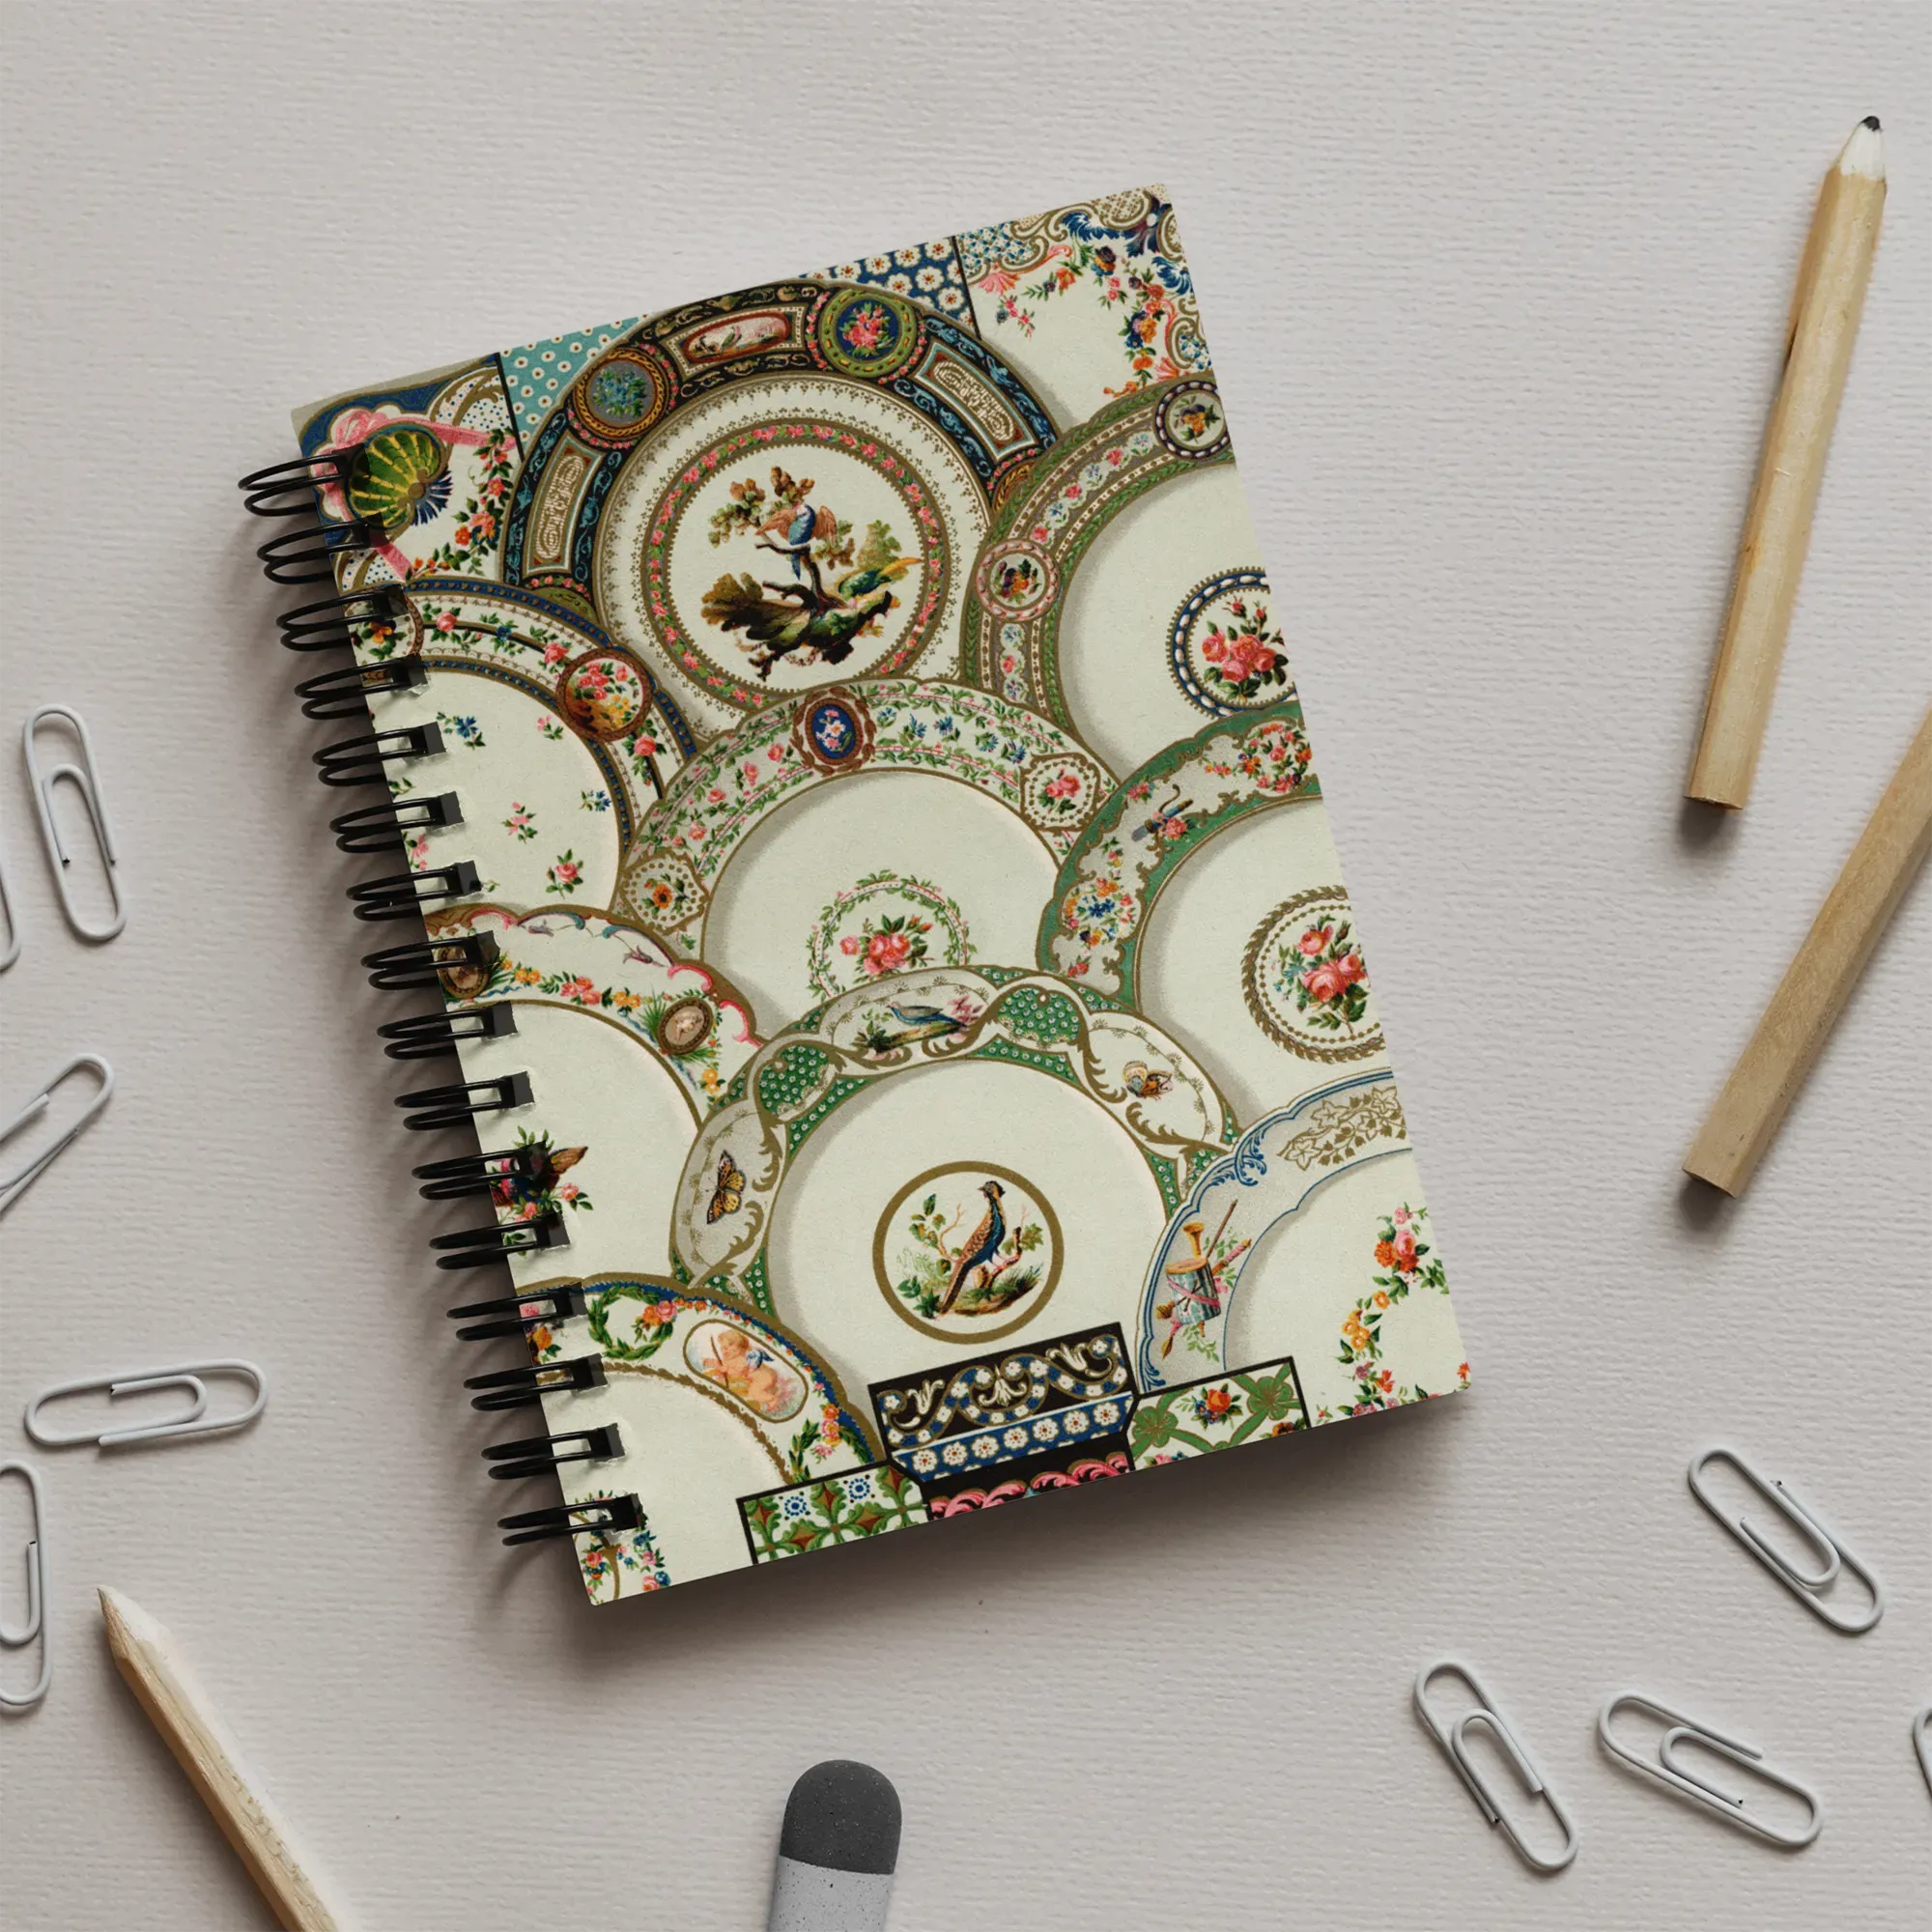 Decorative Plates - Auguste Racinet Art Notebook - Notebooks & Notepads - Aesthetic Art